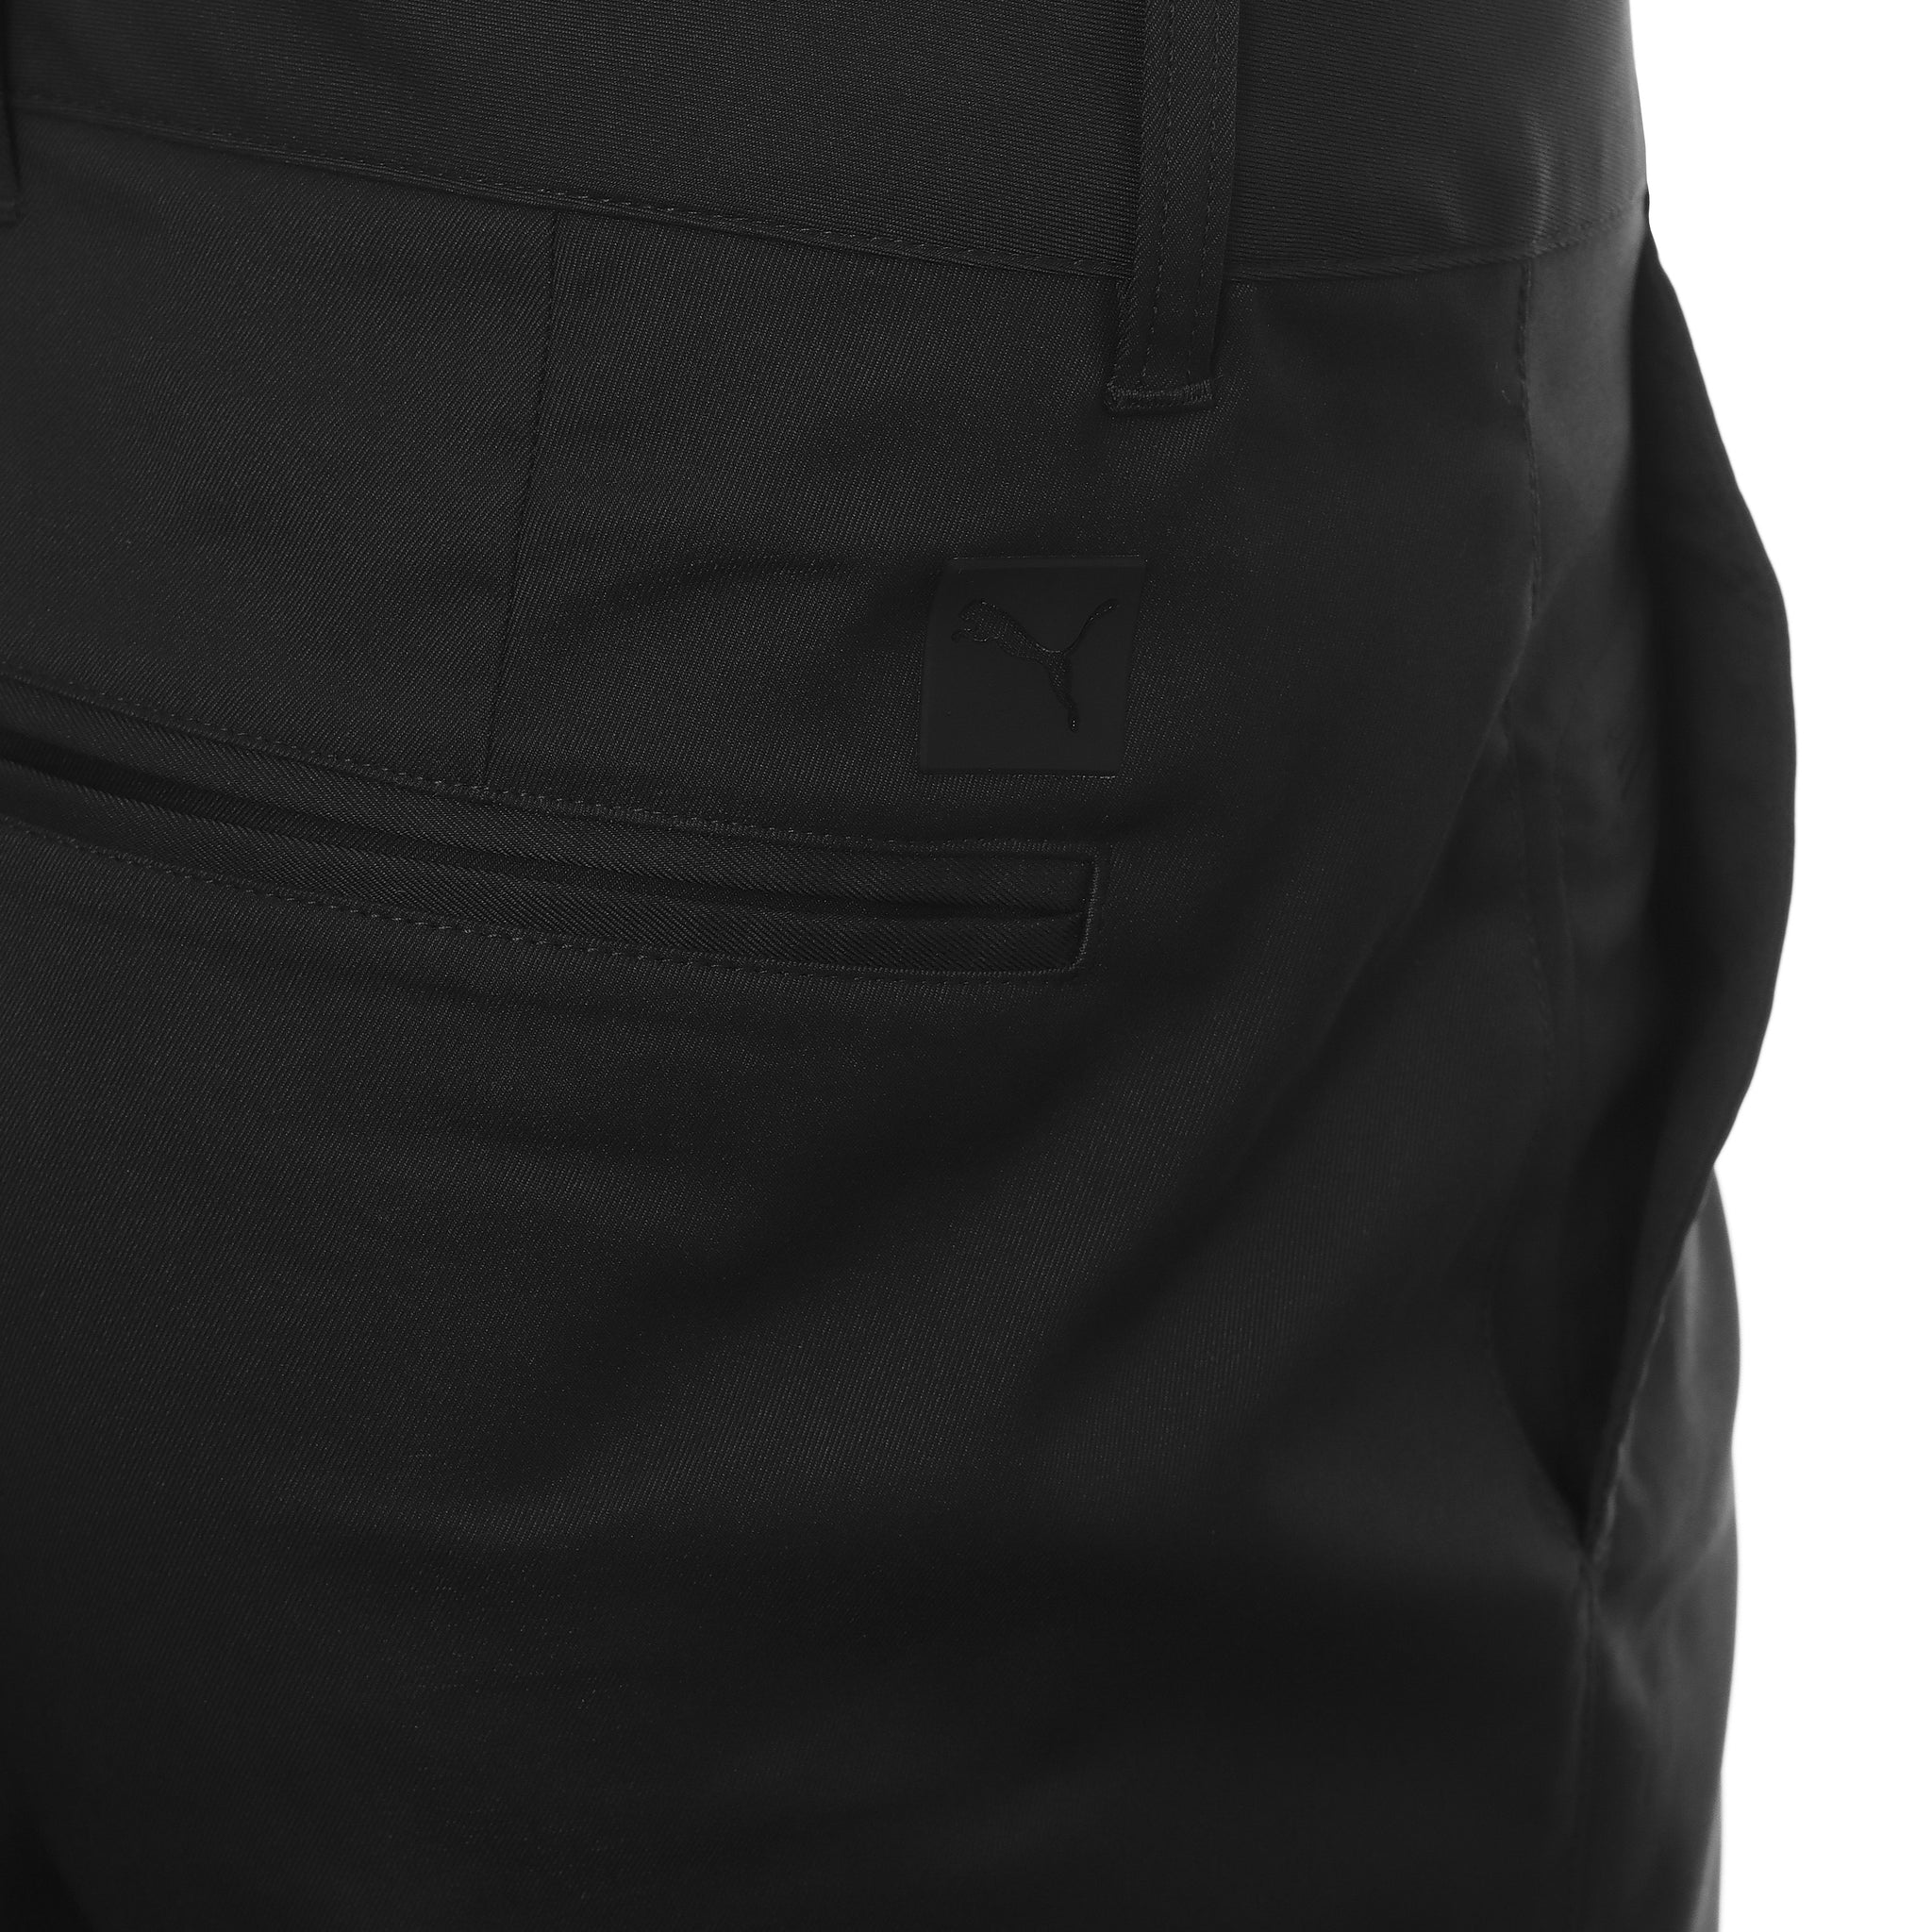 puma-golf-dealer-tailored-8-shorts-620271-puma-black-02